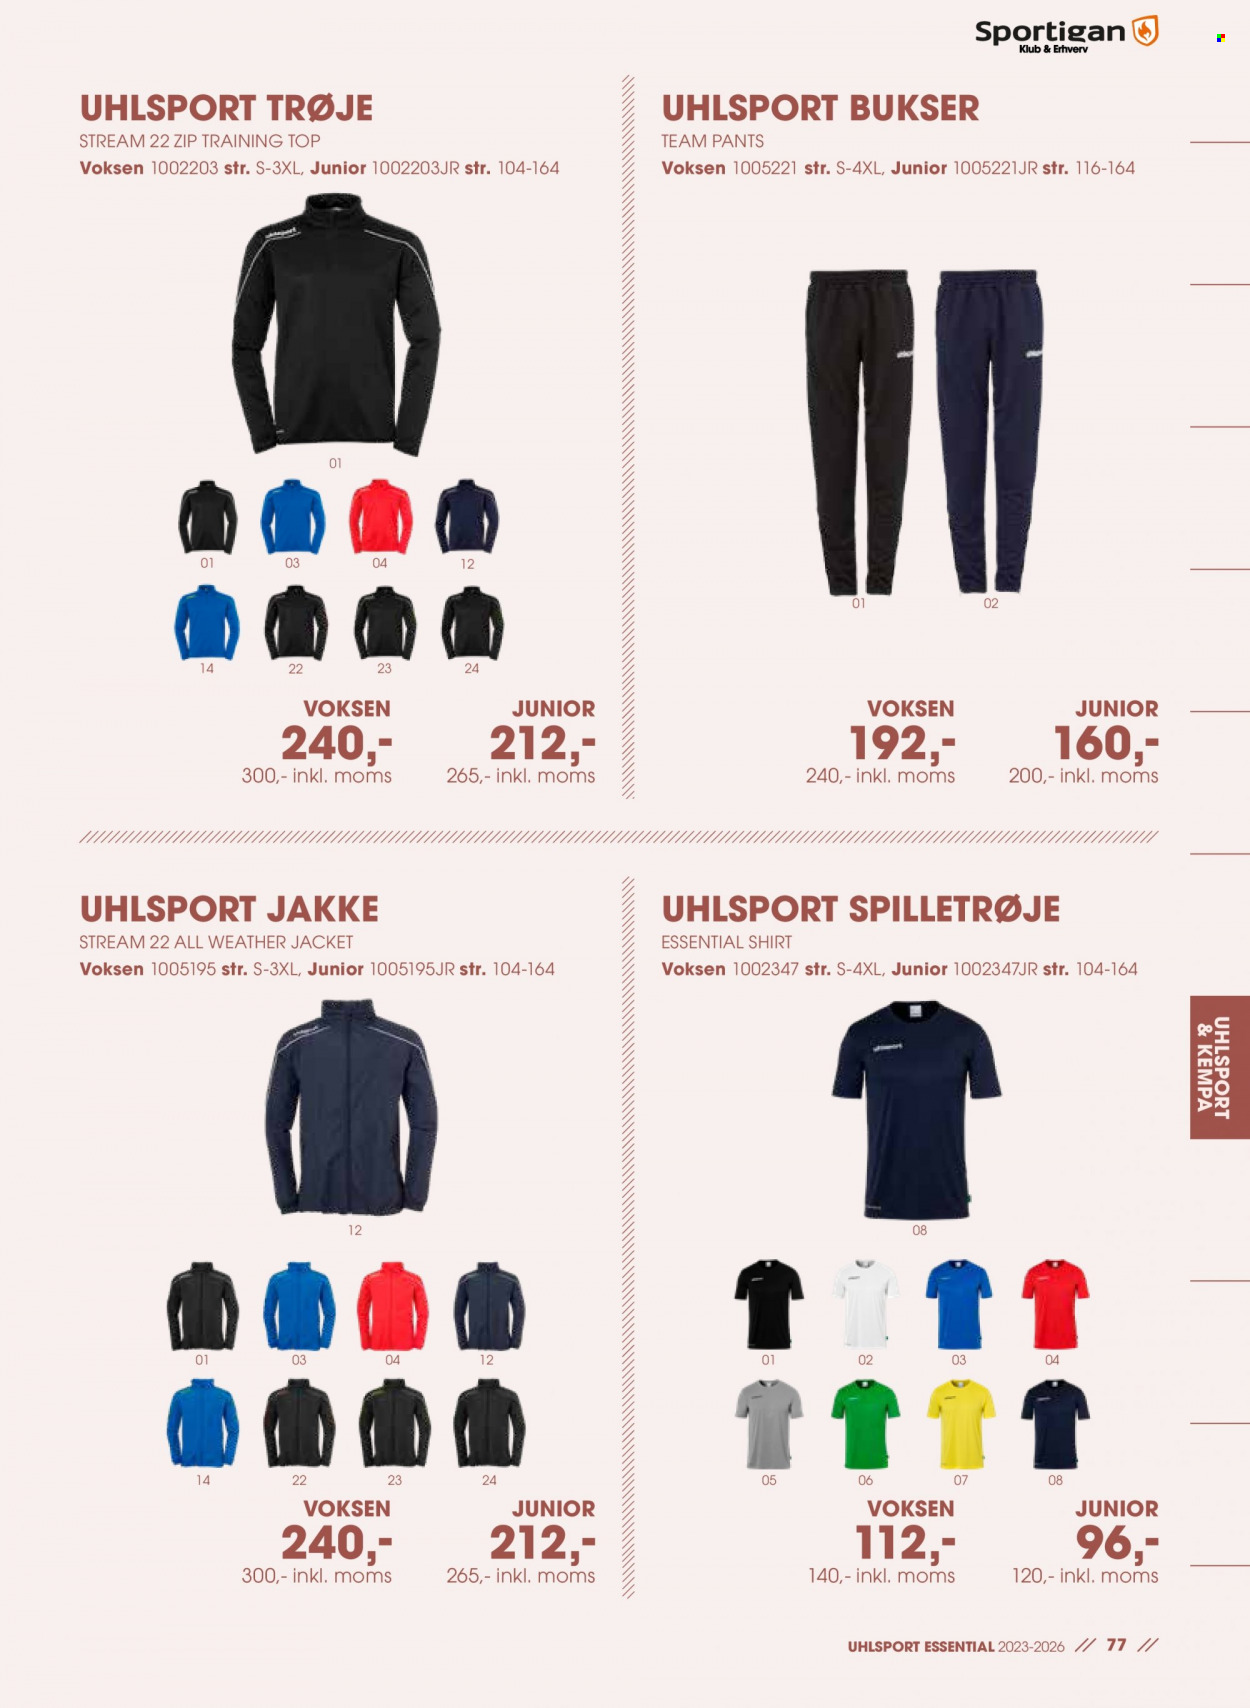 thumbnail - Sportigan tilbud  - tilbudsprodukter - jakke, bukser, Uhlsport, trøje. Side 77.